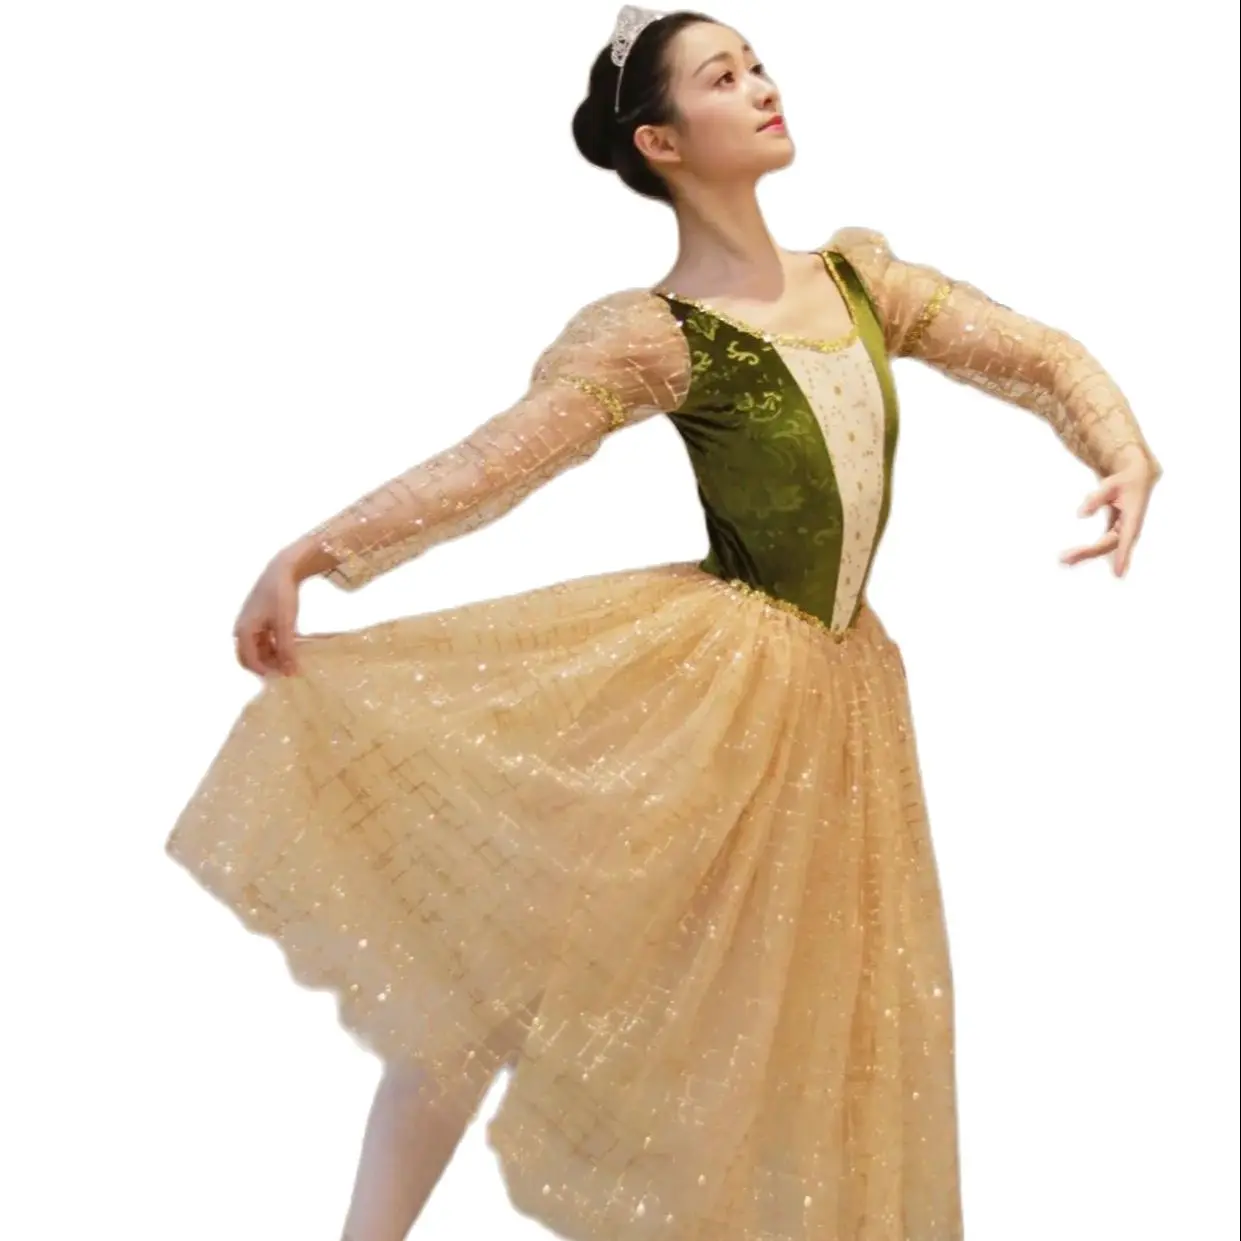 dance-favourite-ballet-tutus-18036-new-ballet-costumes-long-gold-sleeve-romantic-ballet-tutu-stage-performance-tutu